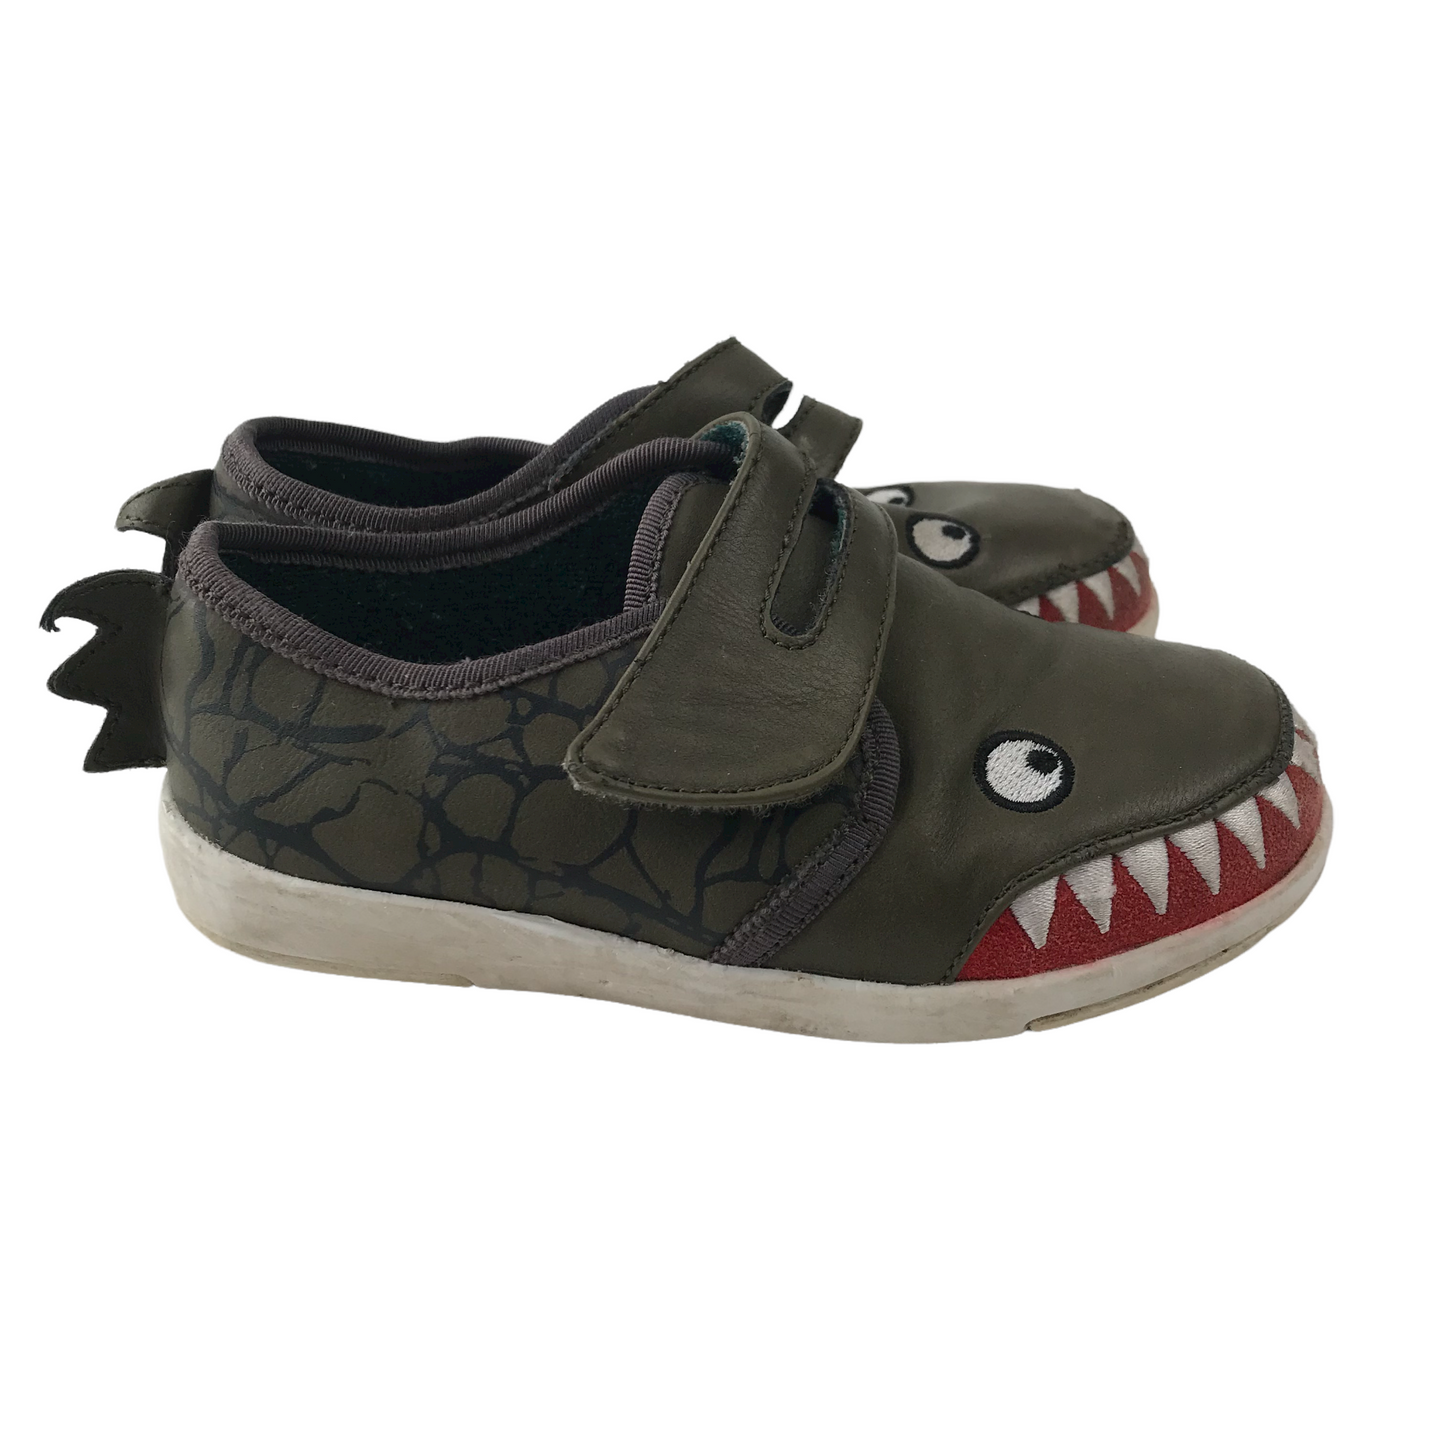 EMU Australia Khaki Green Crocodile Trainers Shoe Size 10 (jr)